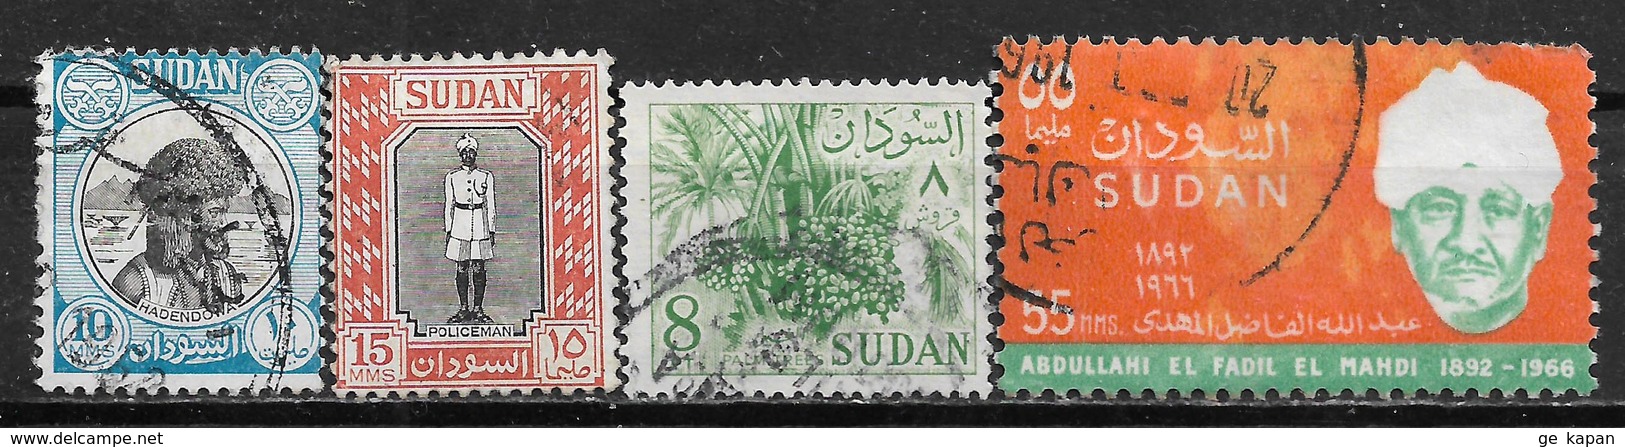 1951-1968 SUDAN SET OF 4 USED STAMPS (Michel # 136,137,188x,244) CV €1.80 - Sudan (1954-...)